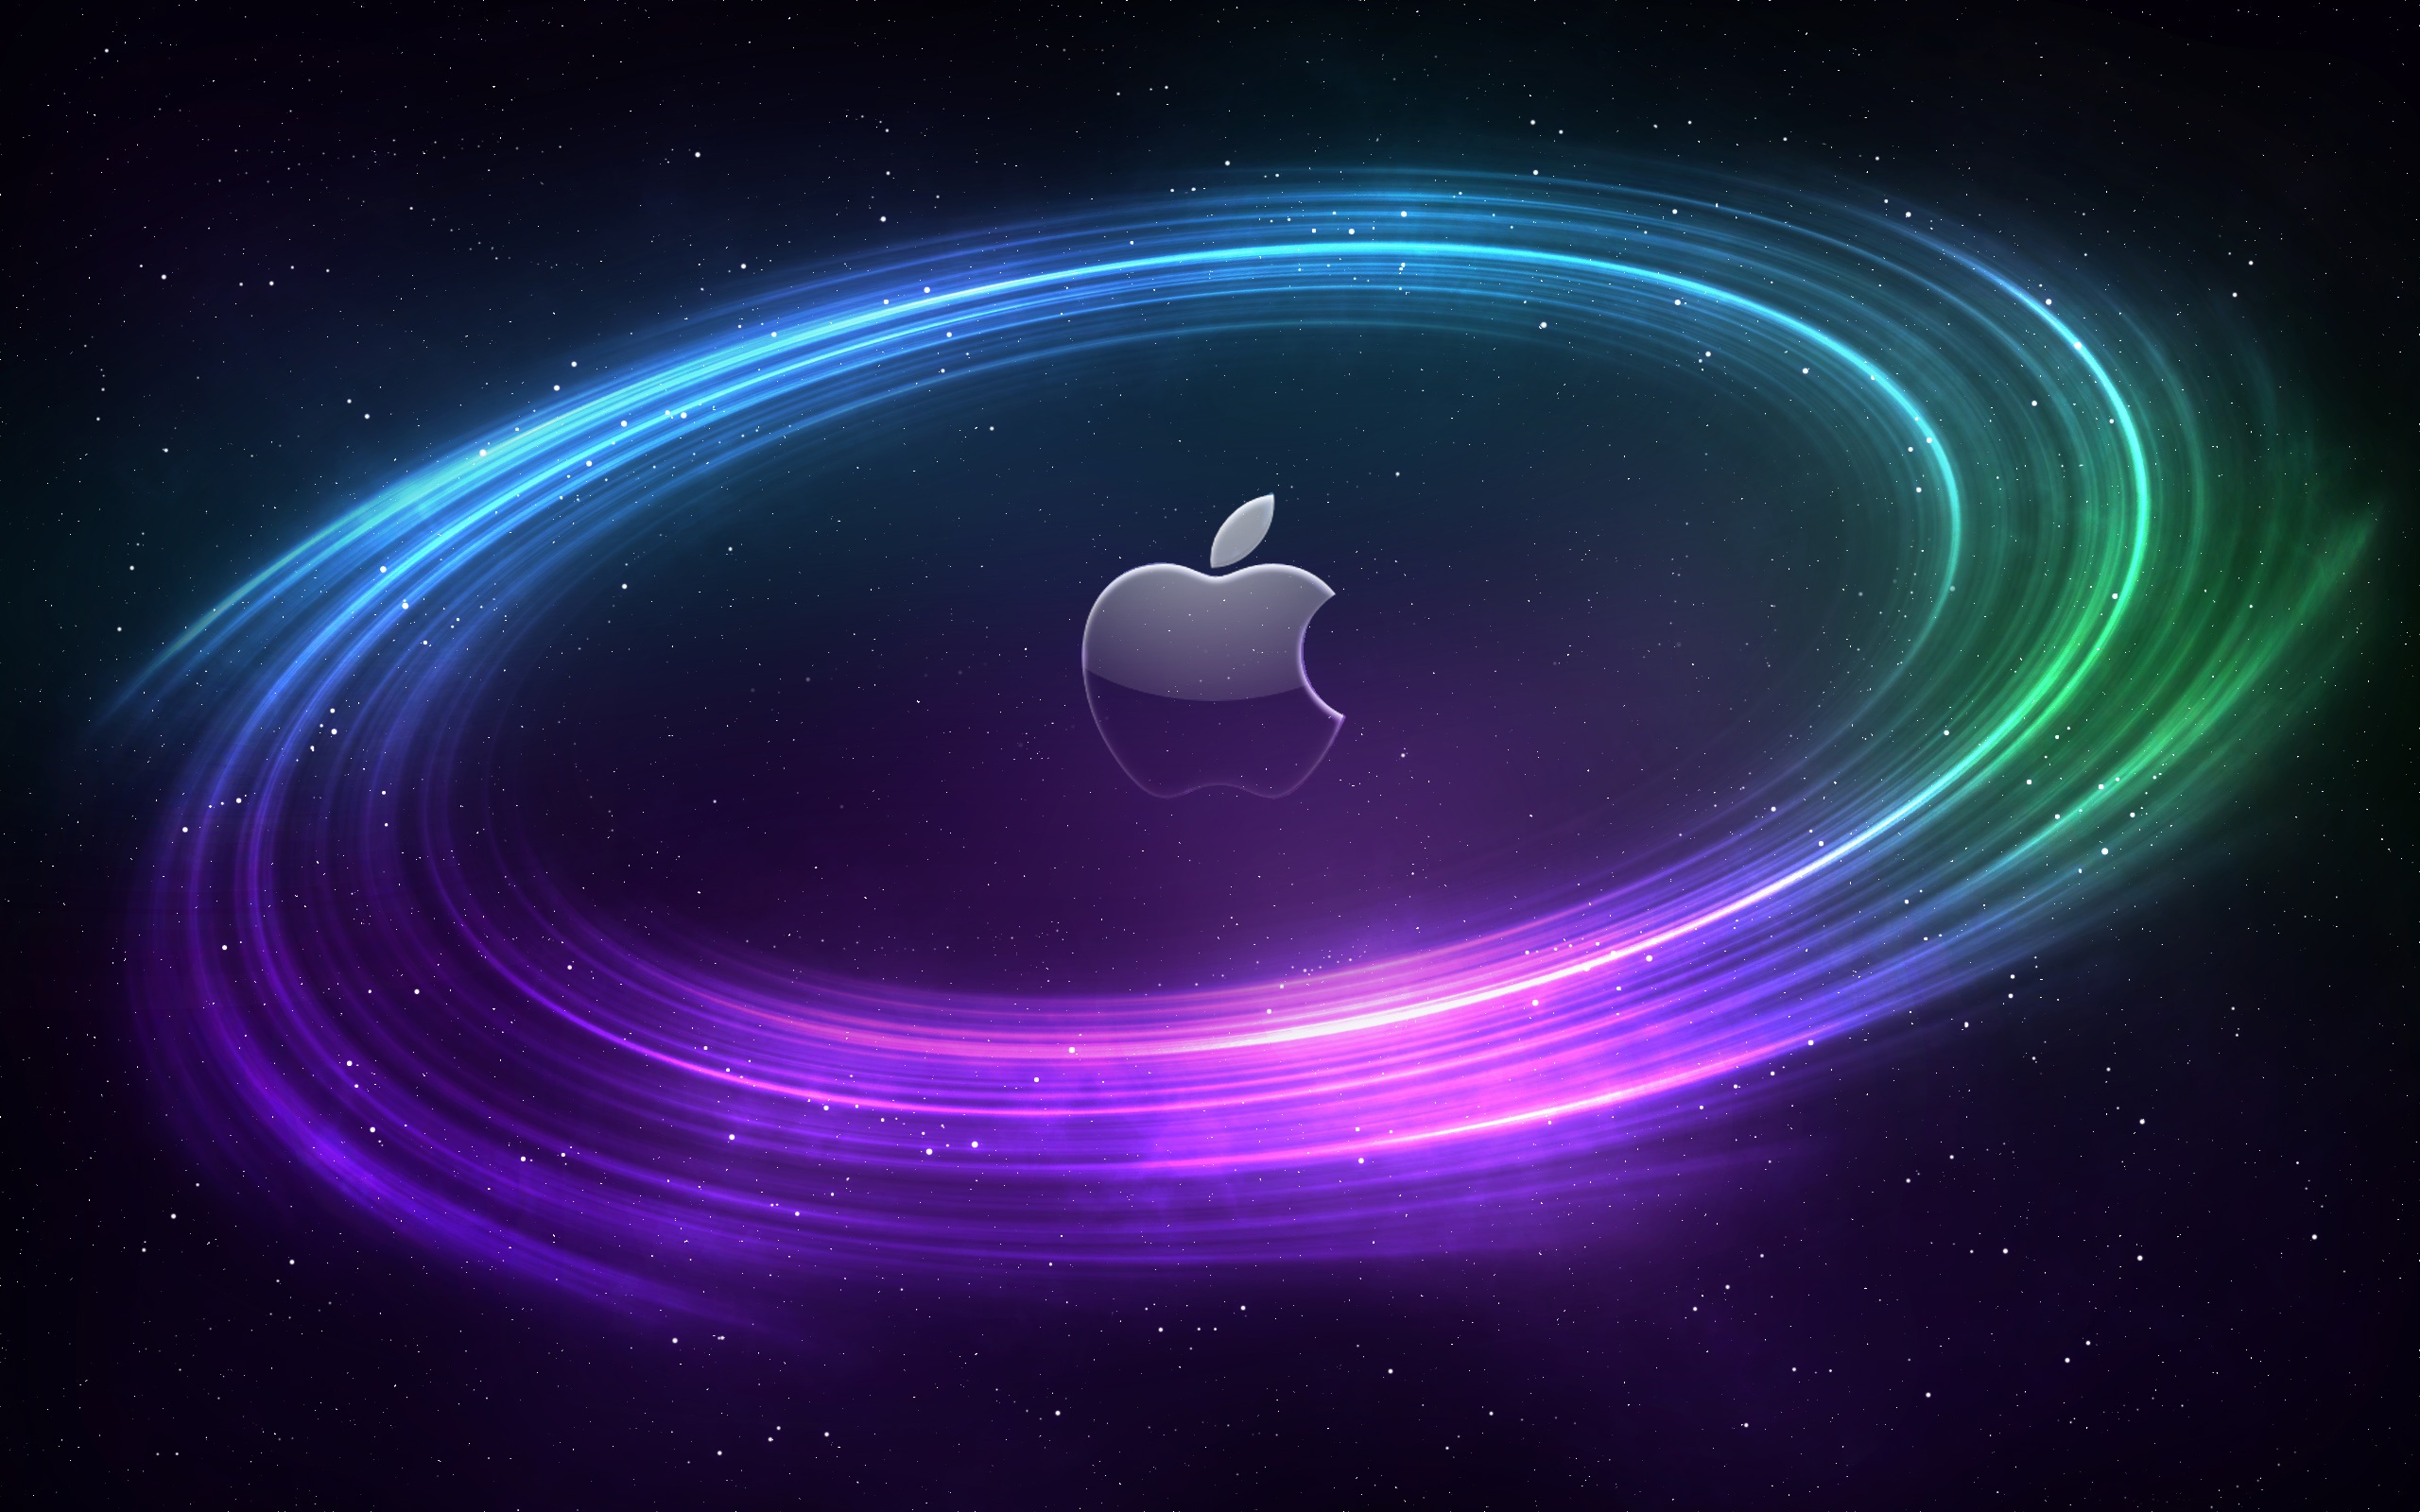 Apple mac os x snow leopard download 10.6